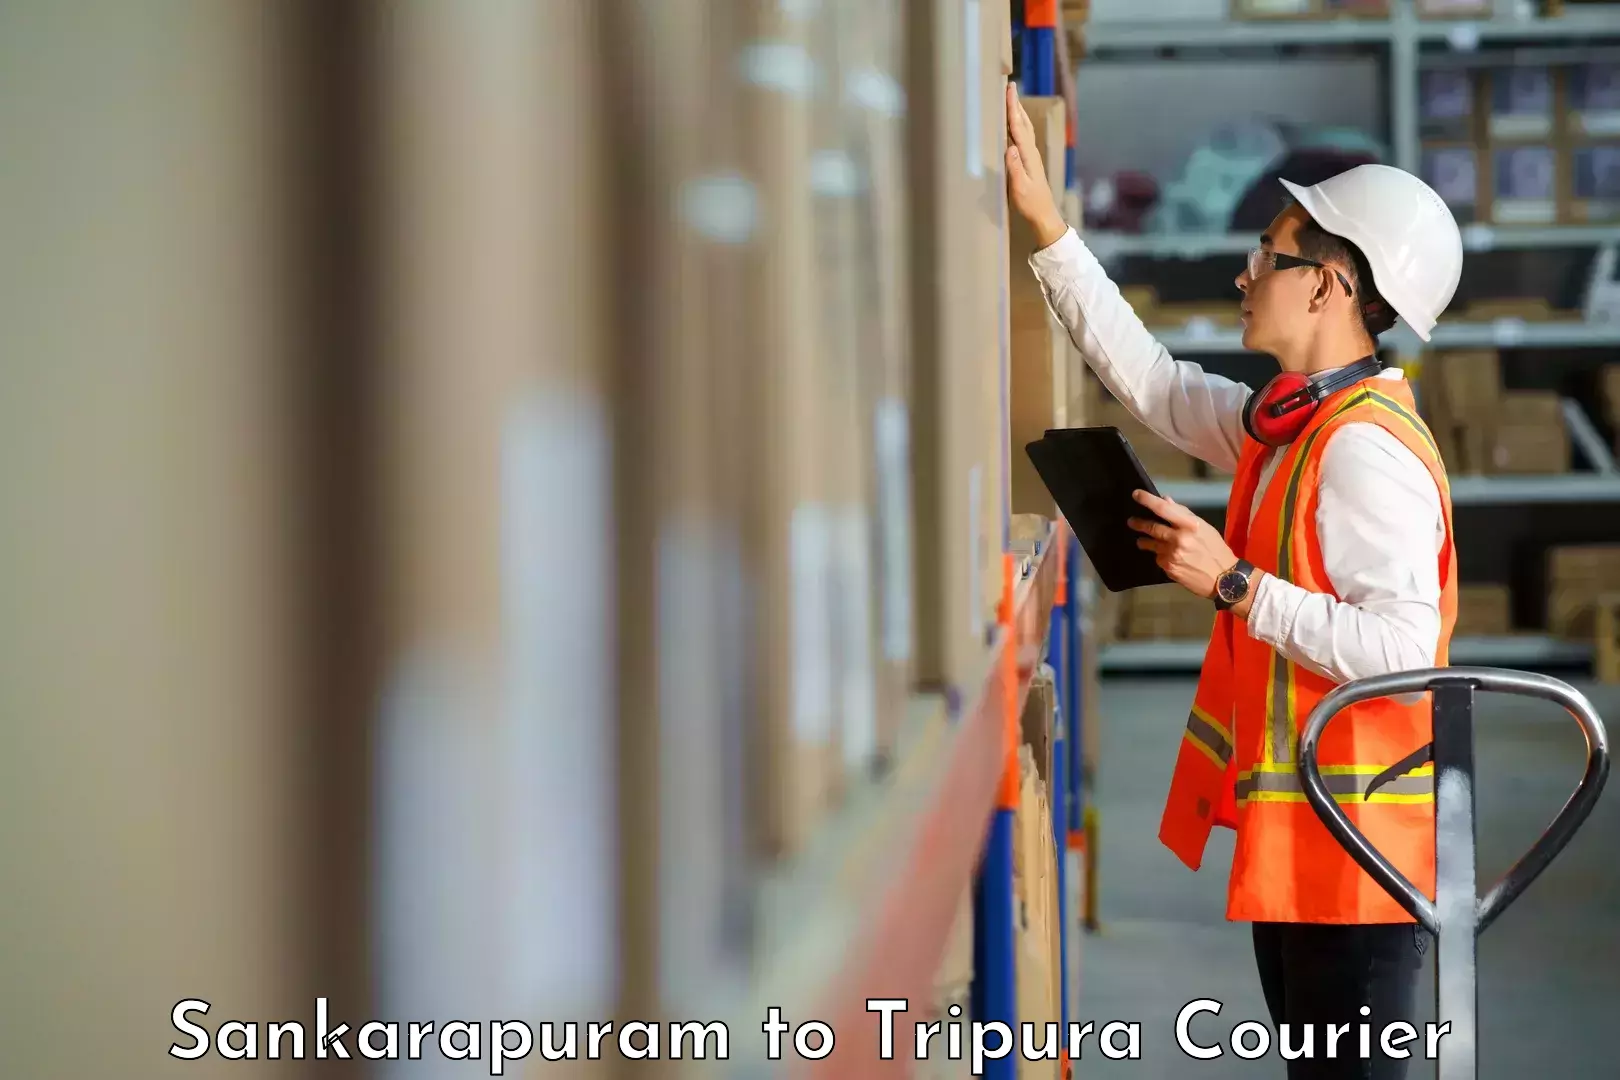 Cargo delivery service Sankarapuram to Udaipur Tripura